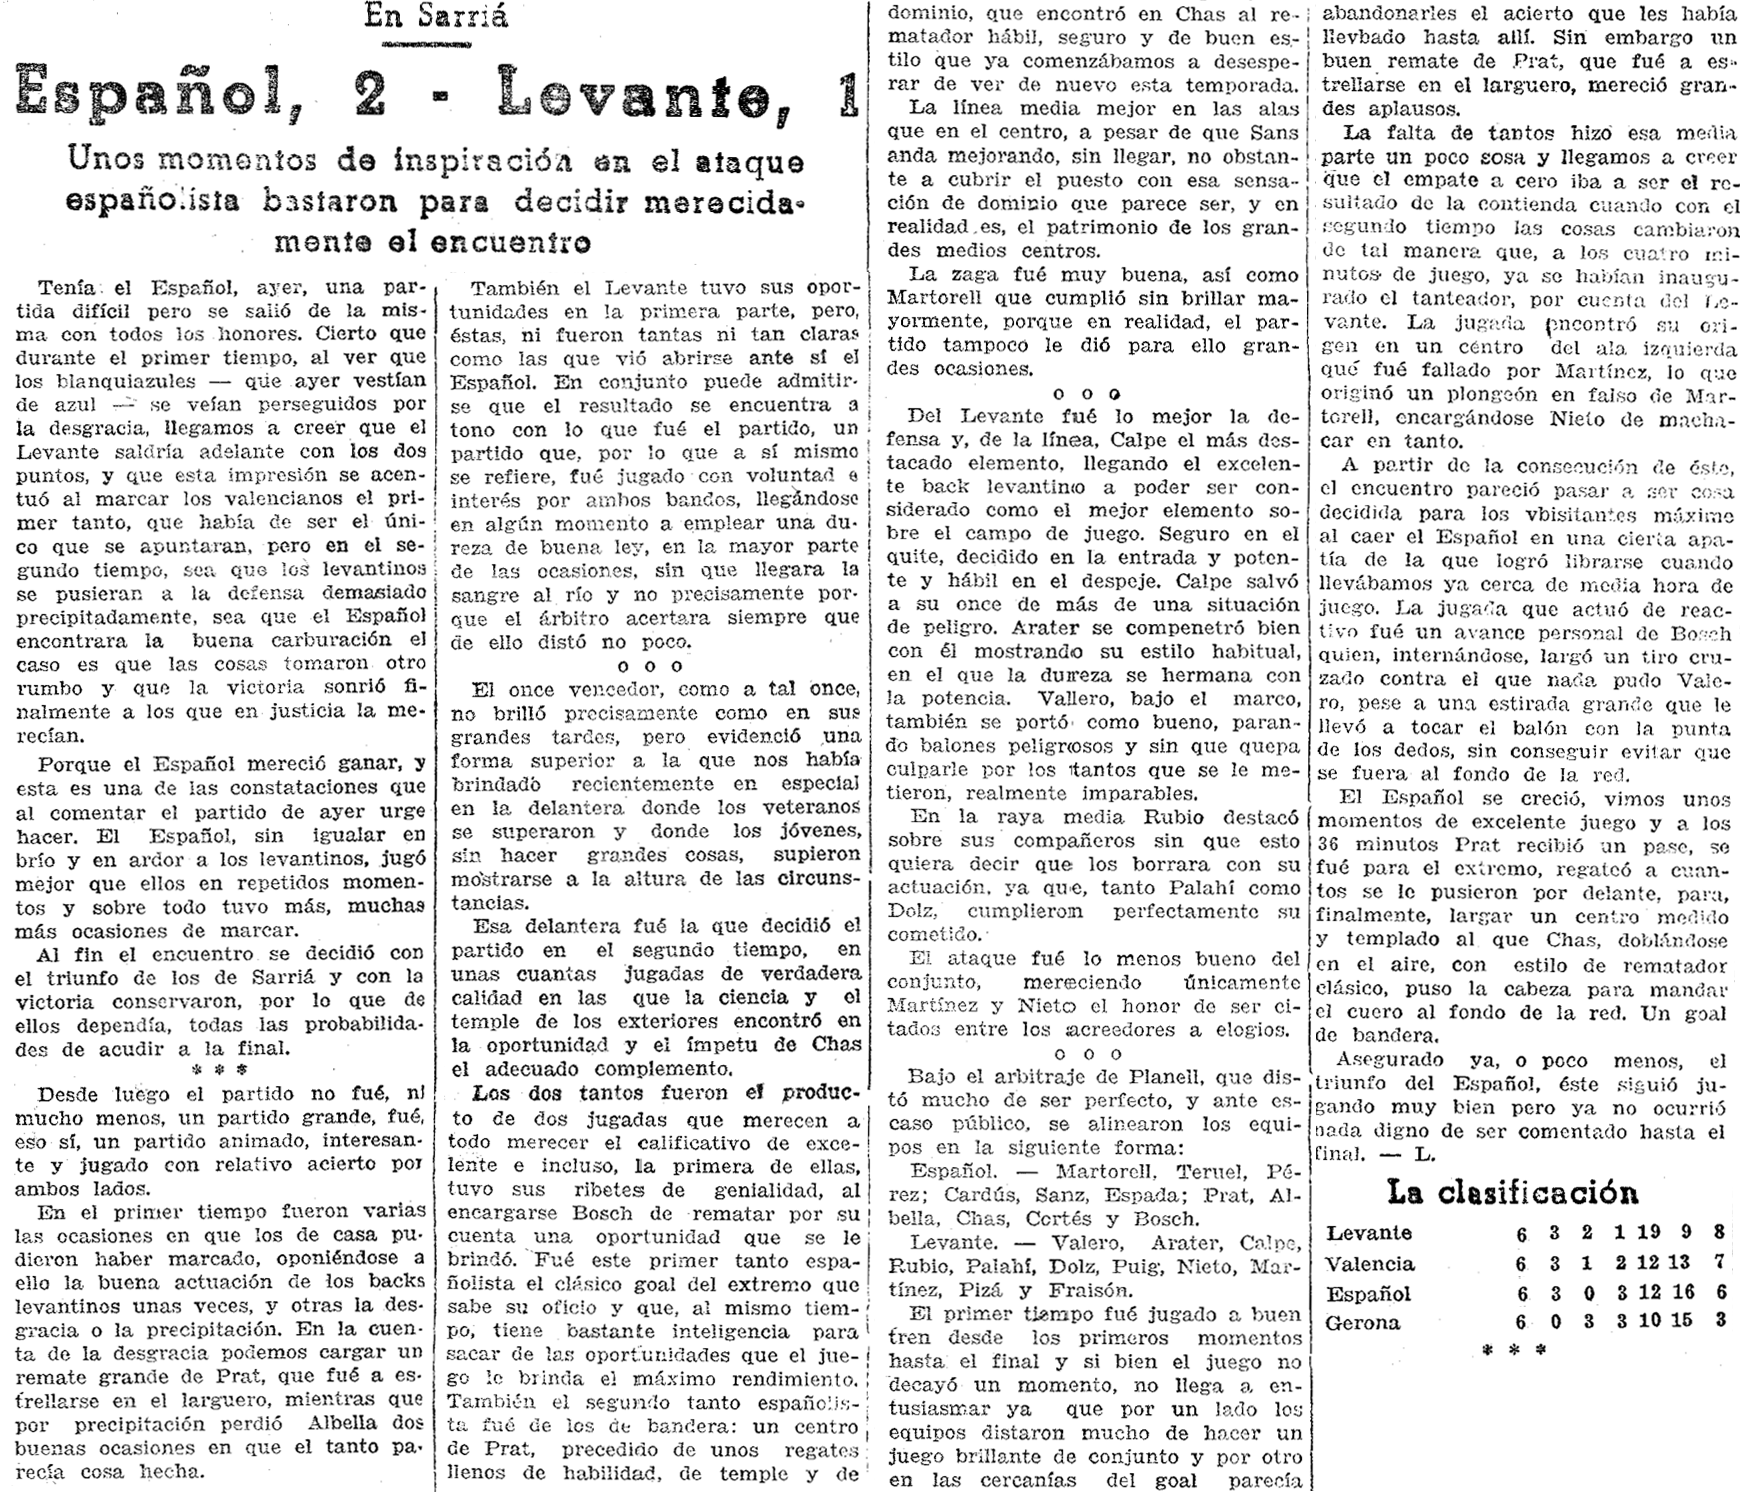 1937.07.11 (11 июля 1937), Эспаньол - Леванте, 2-1.png